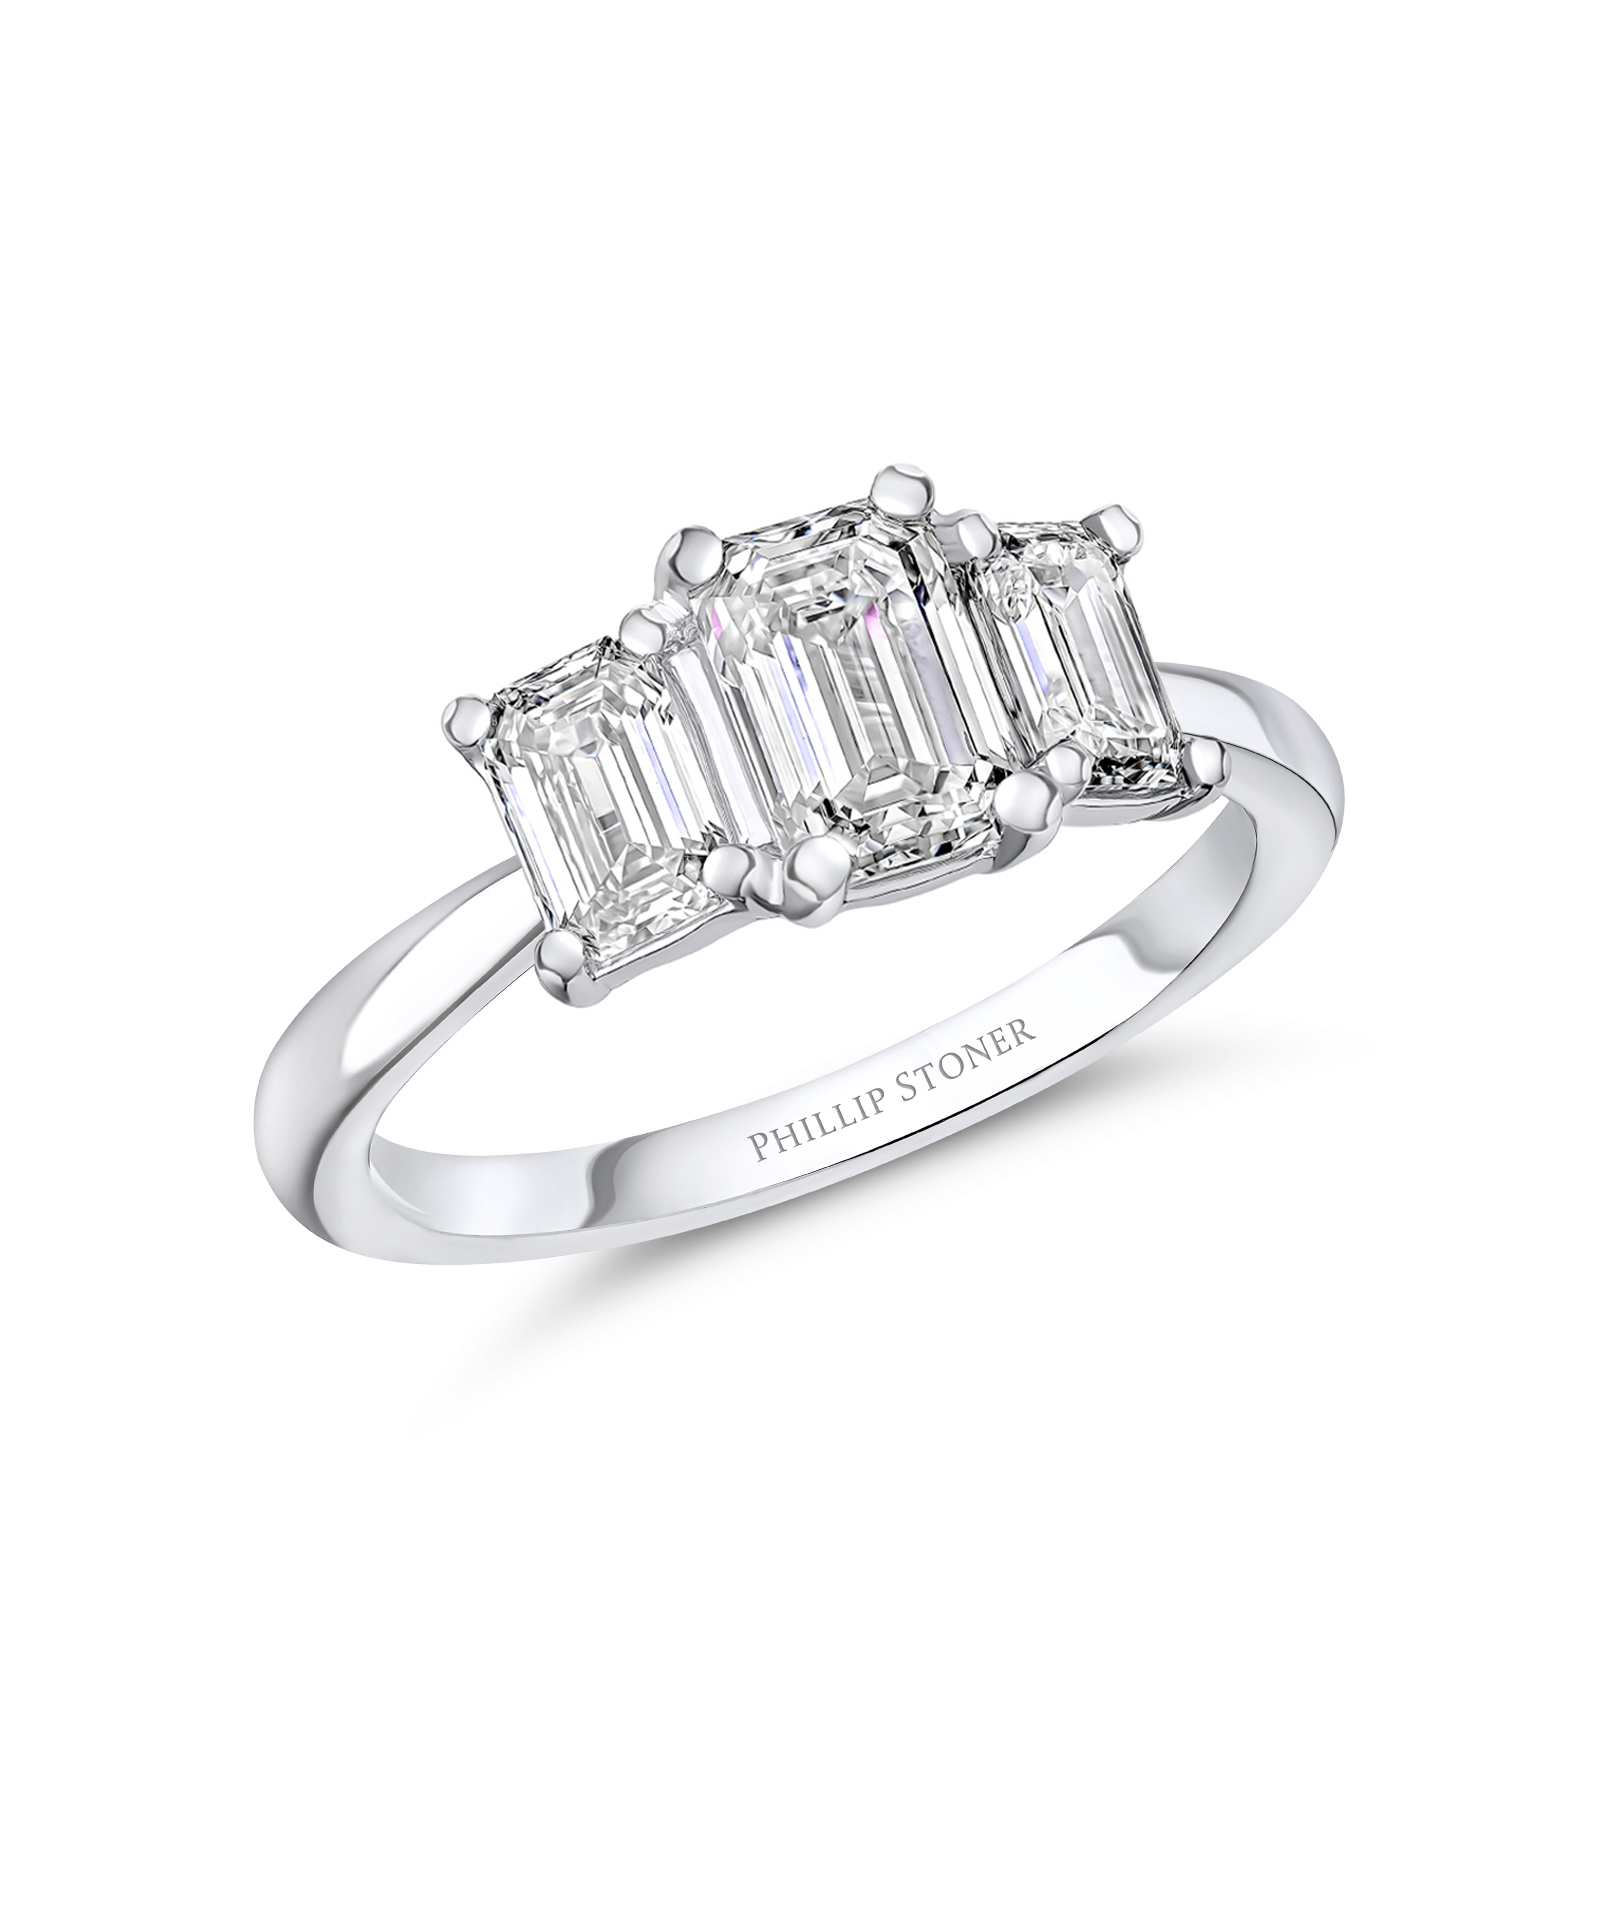 1.20ct Emerald Cut Diamond Trilogy Engagement Ring - Phillip Stoner The Jeweller